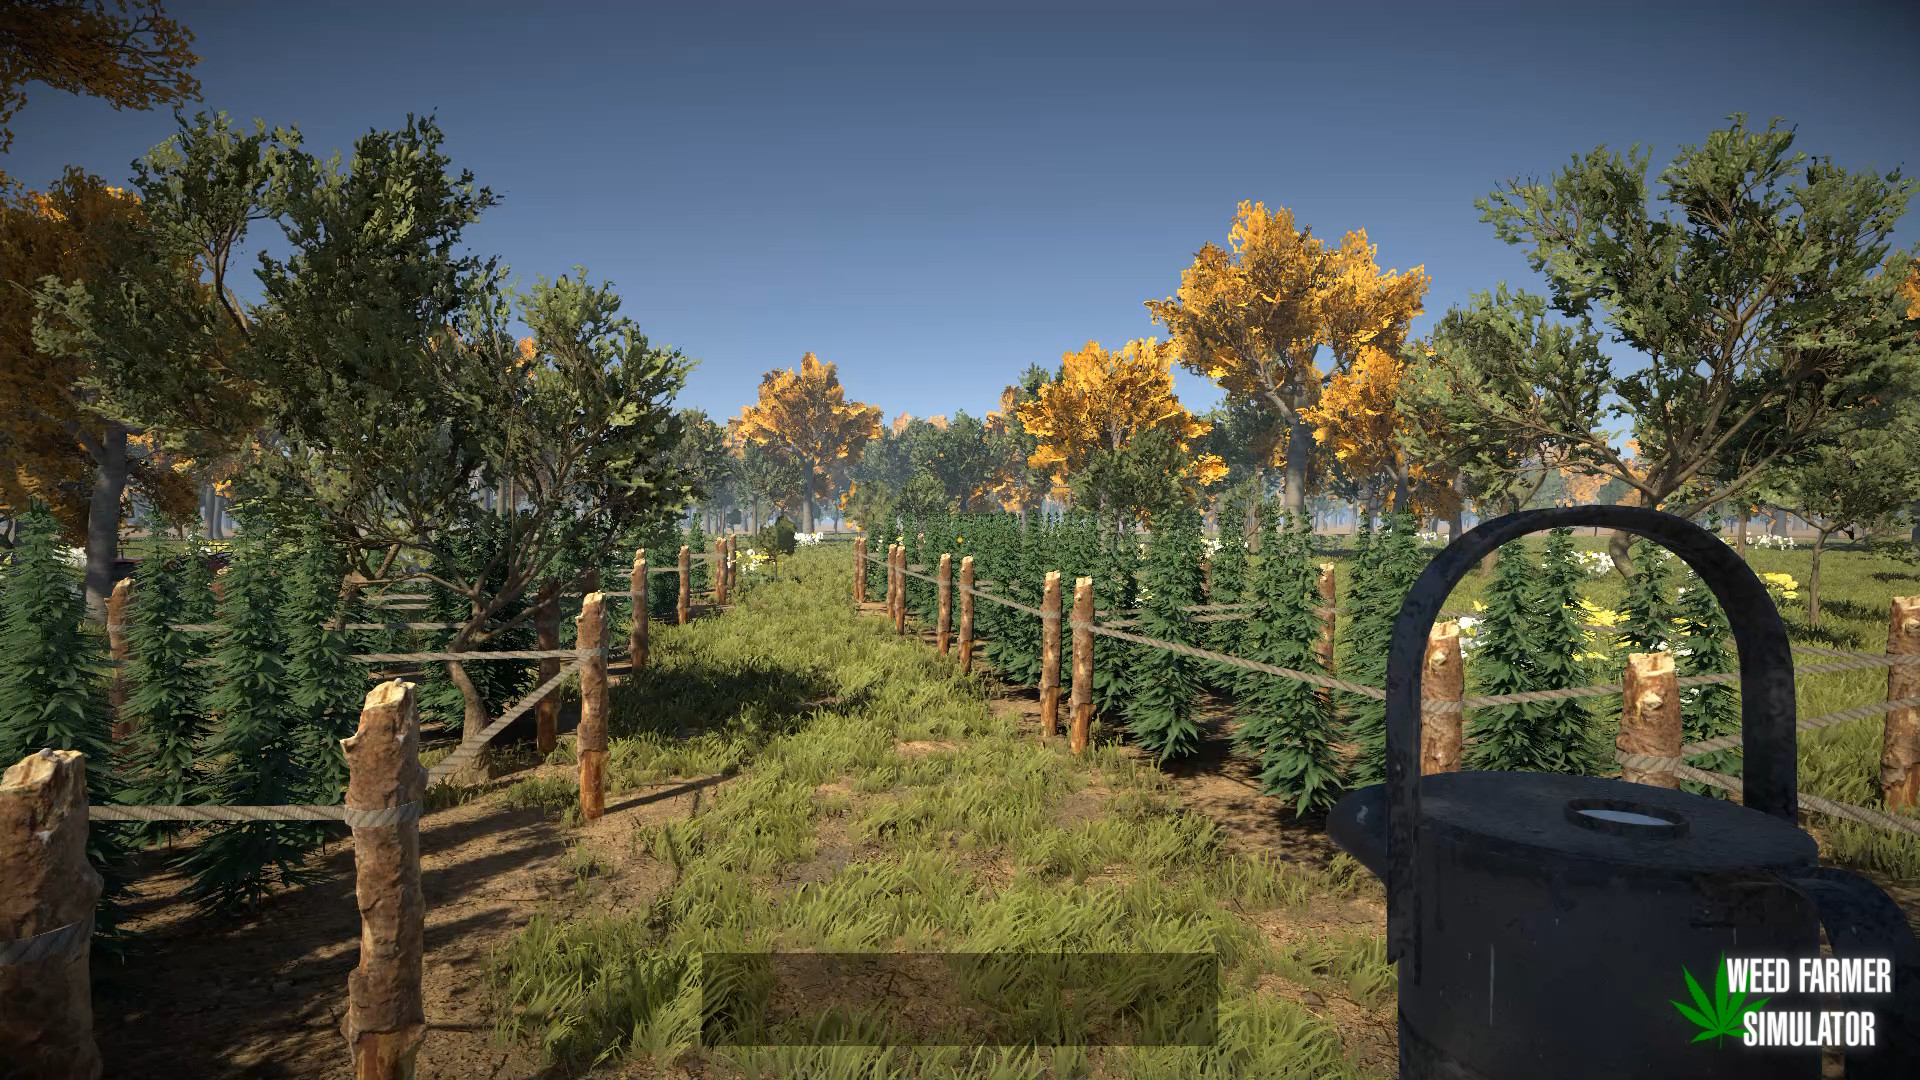 Weed Farmer Simulator Free Download